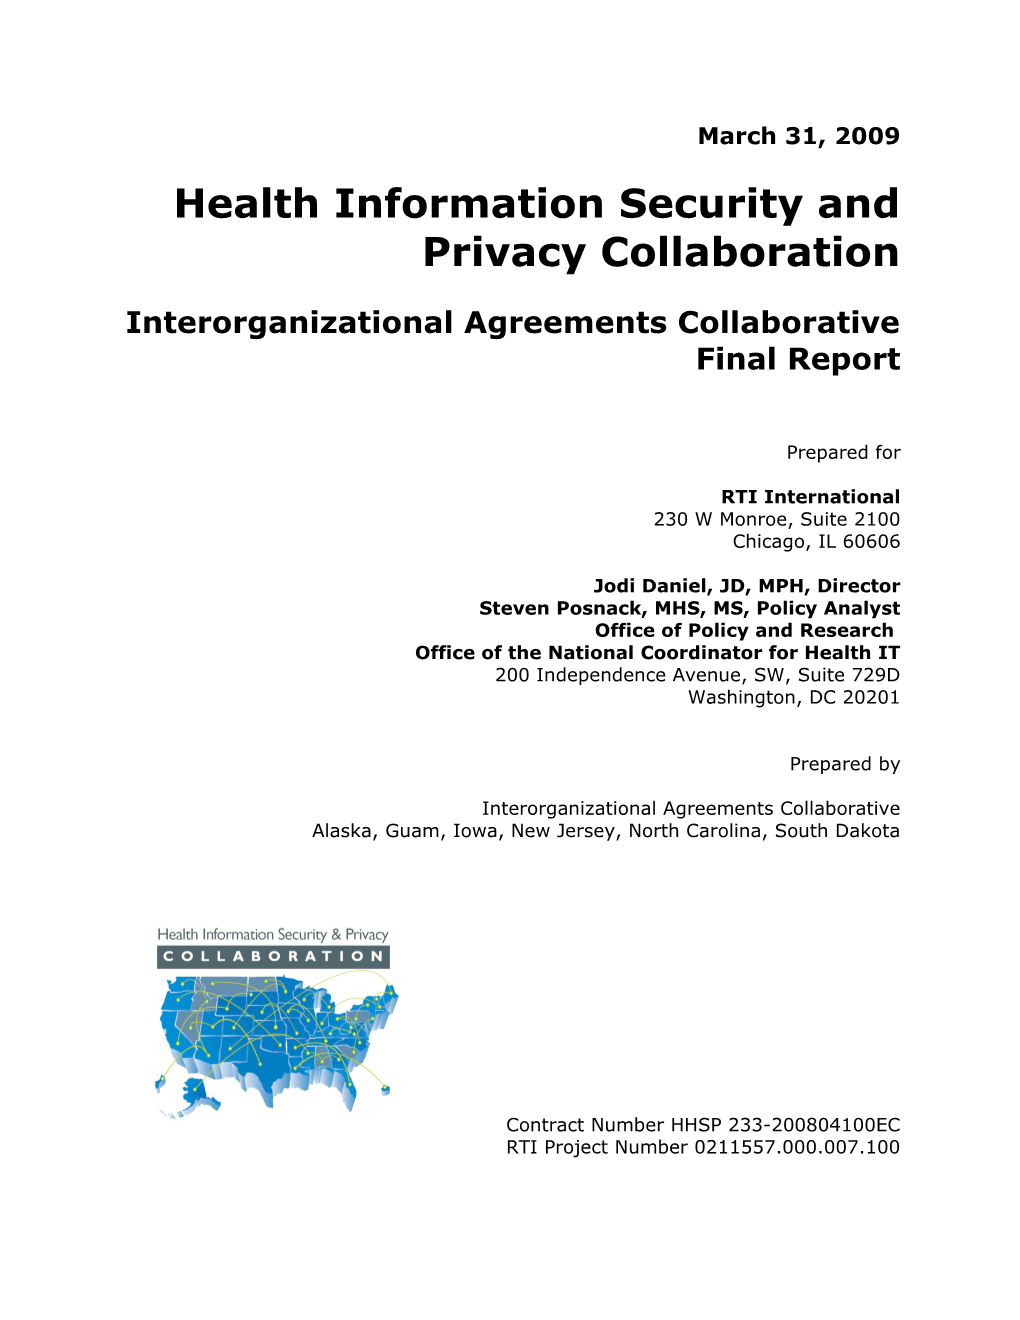 Interorganizational Agreements Collaborative Final Report